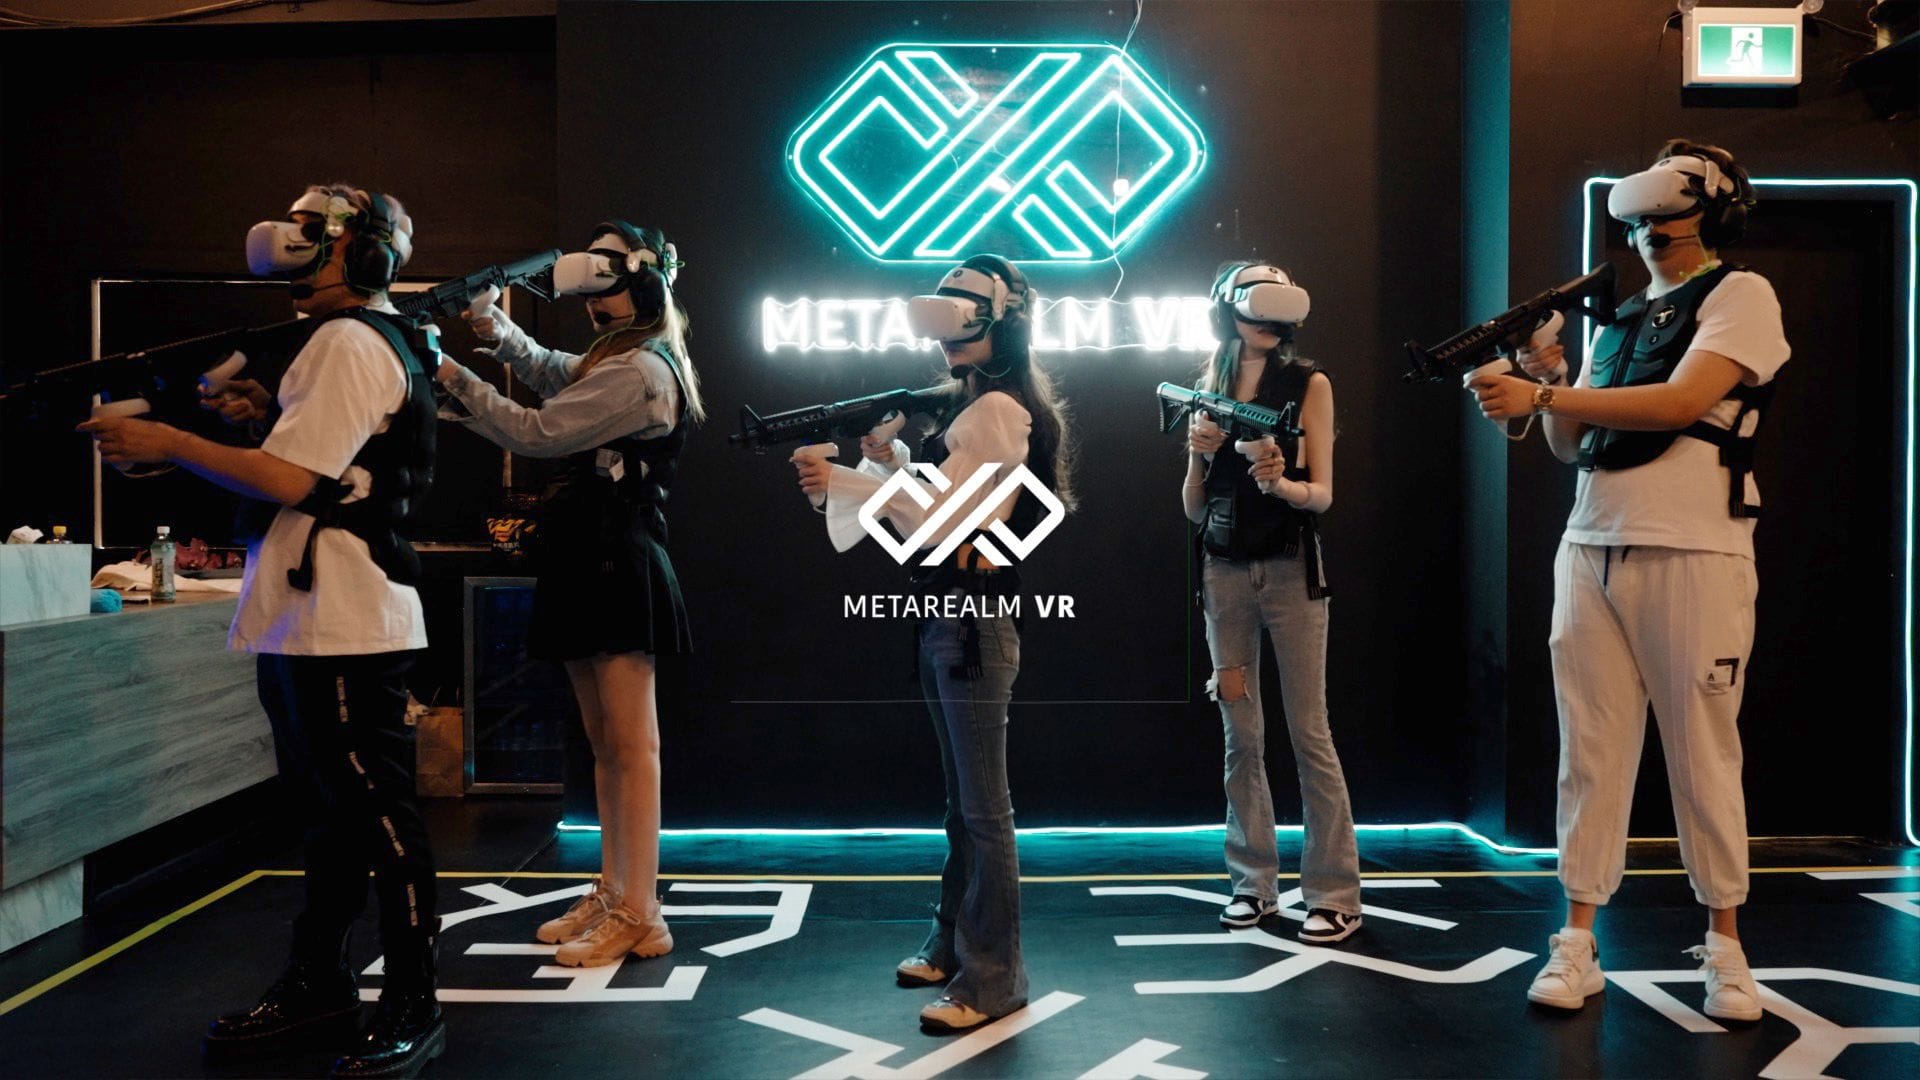 VR Gaming Customers at Metarealm VR